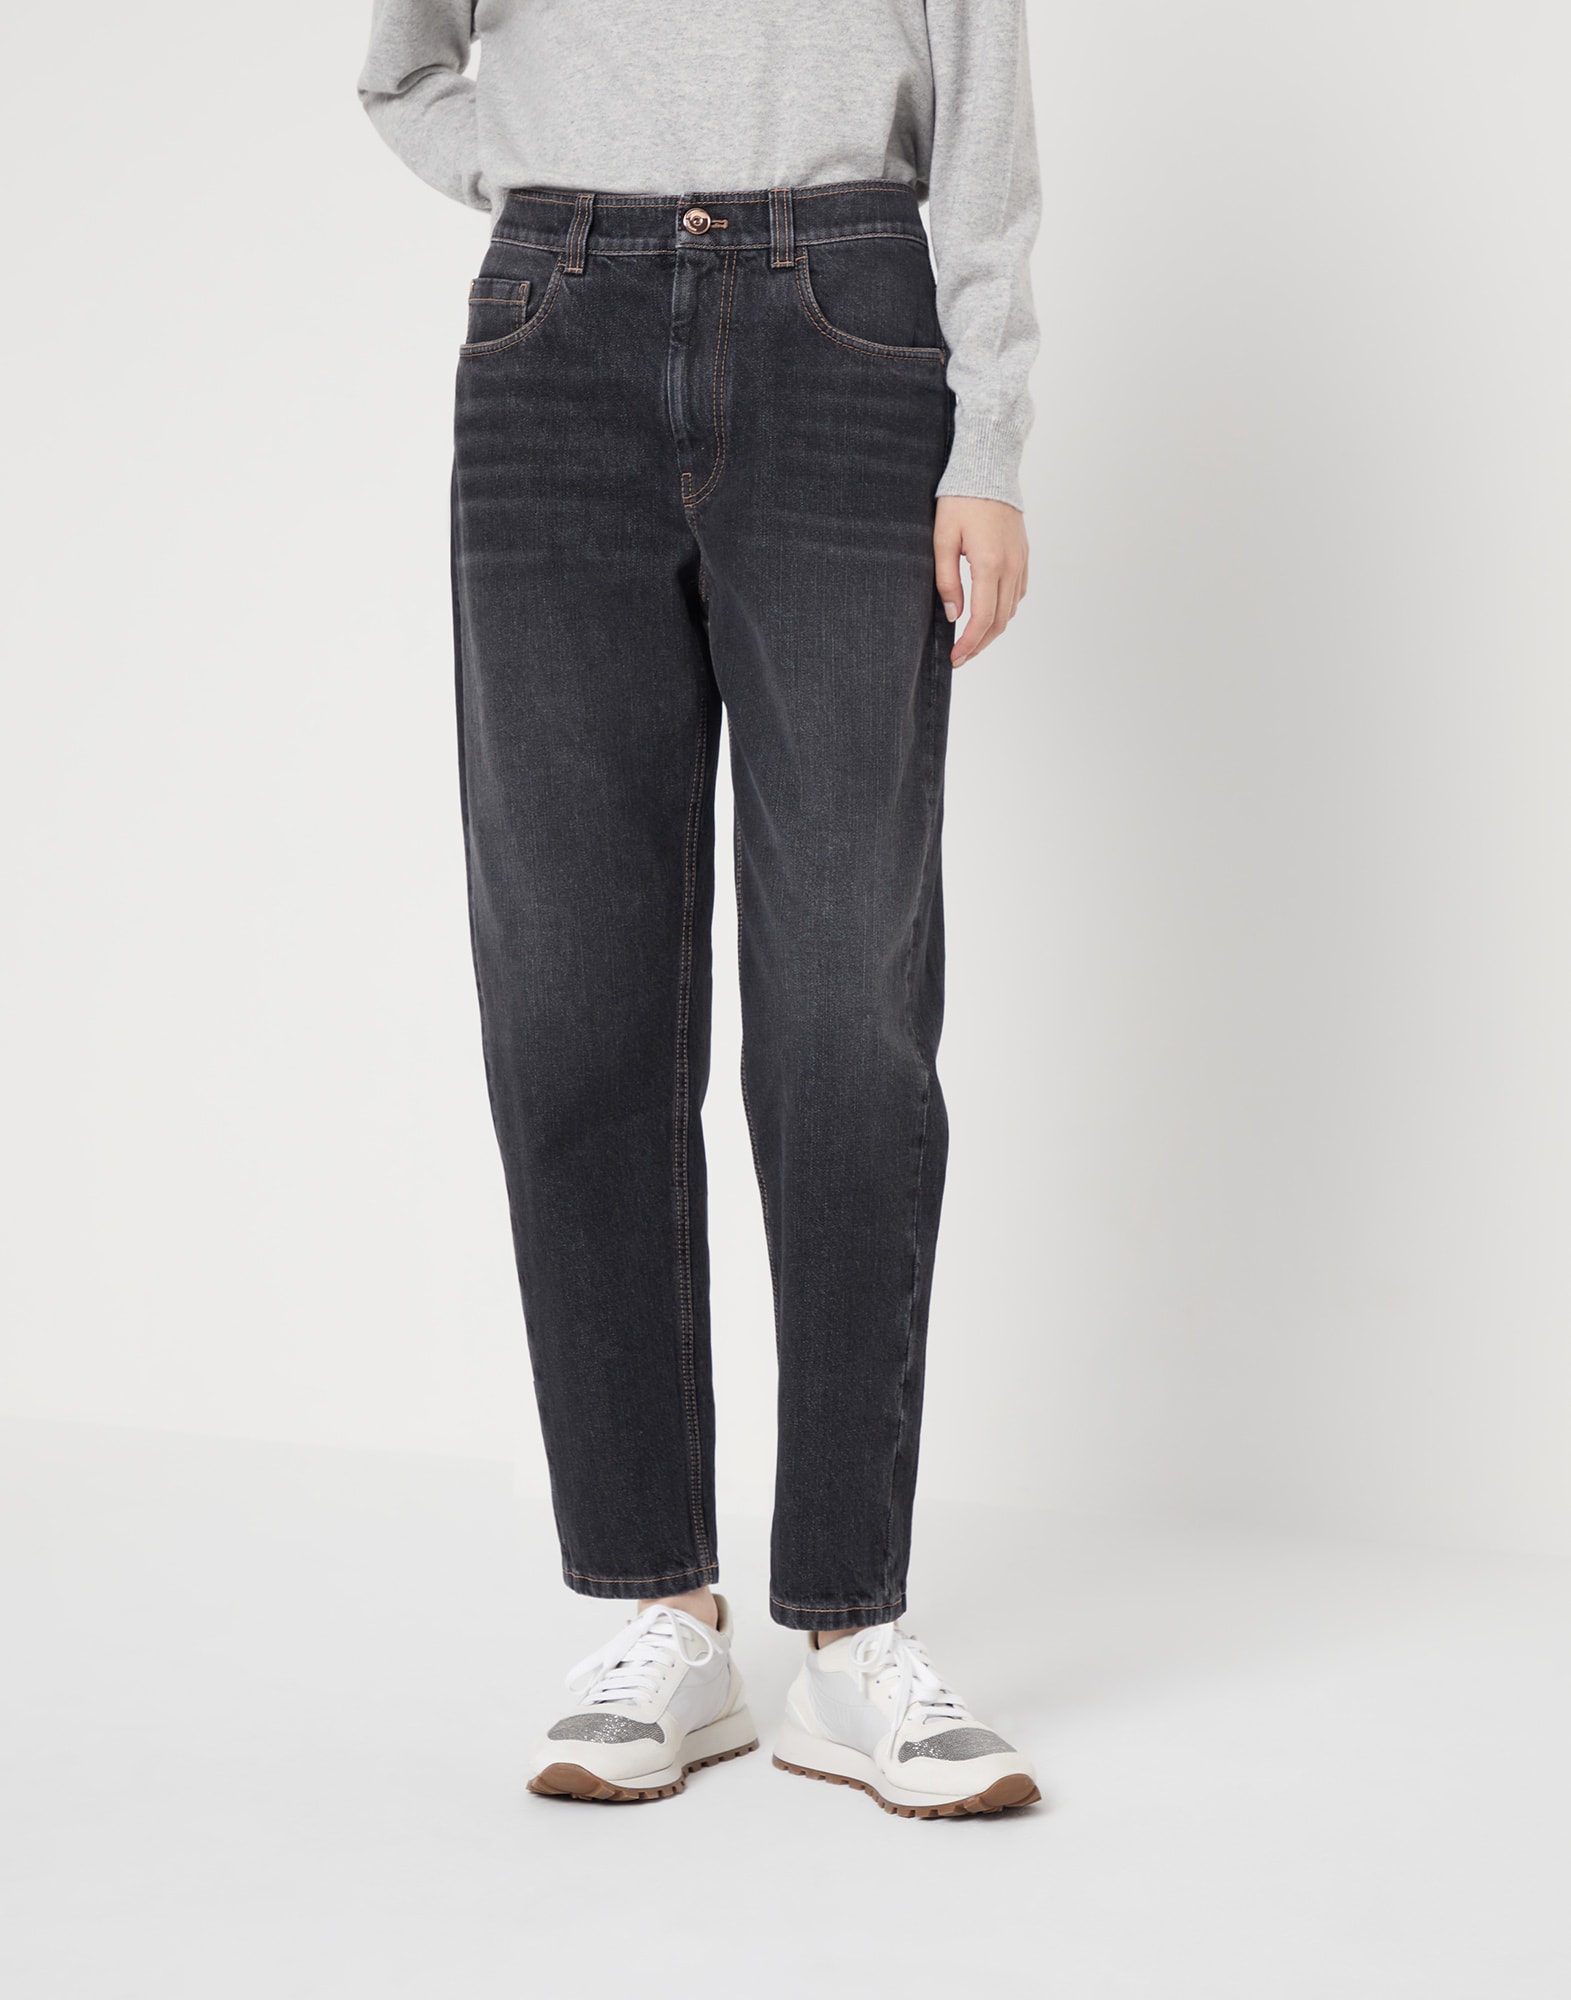 Women's jeans - Designer denim collection